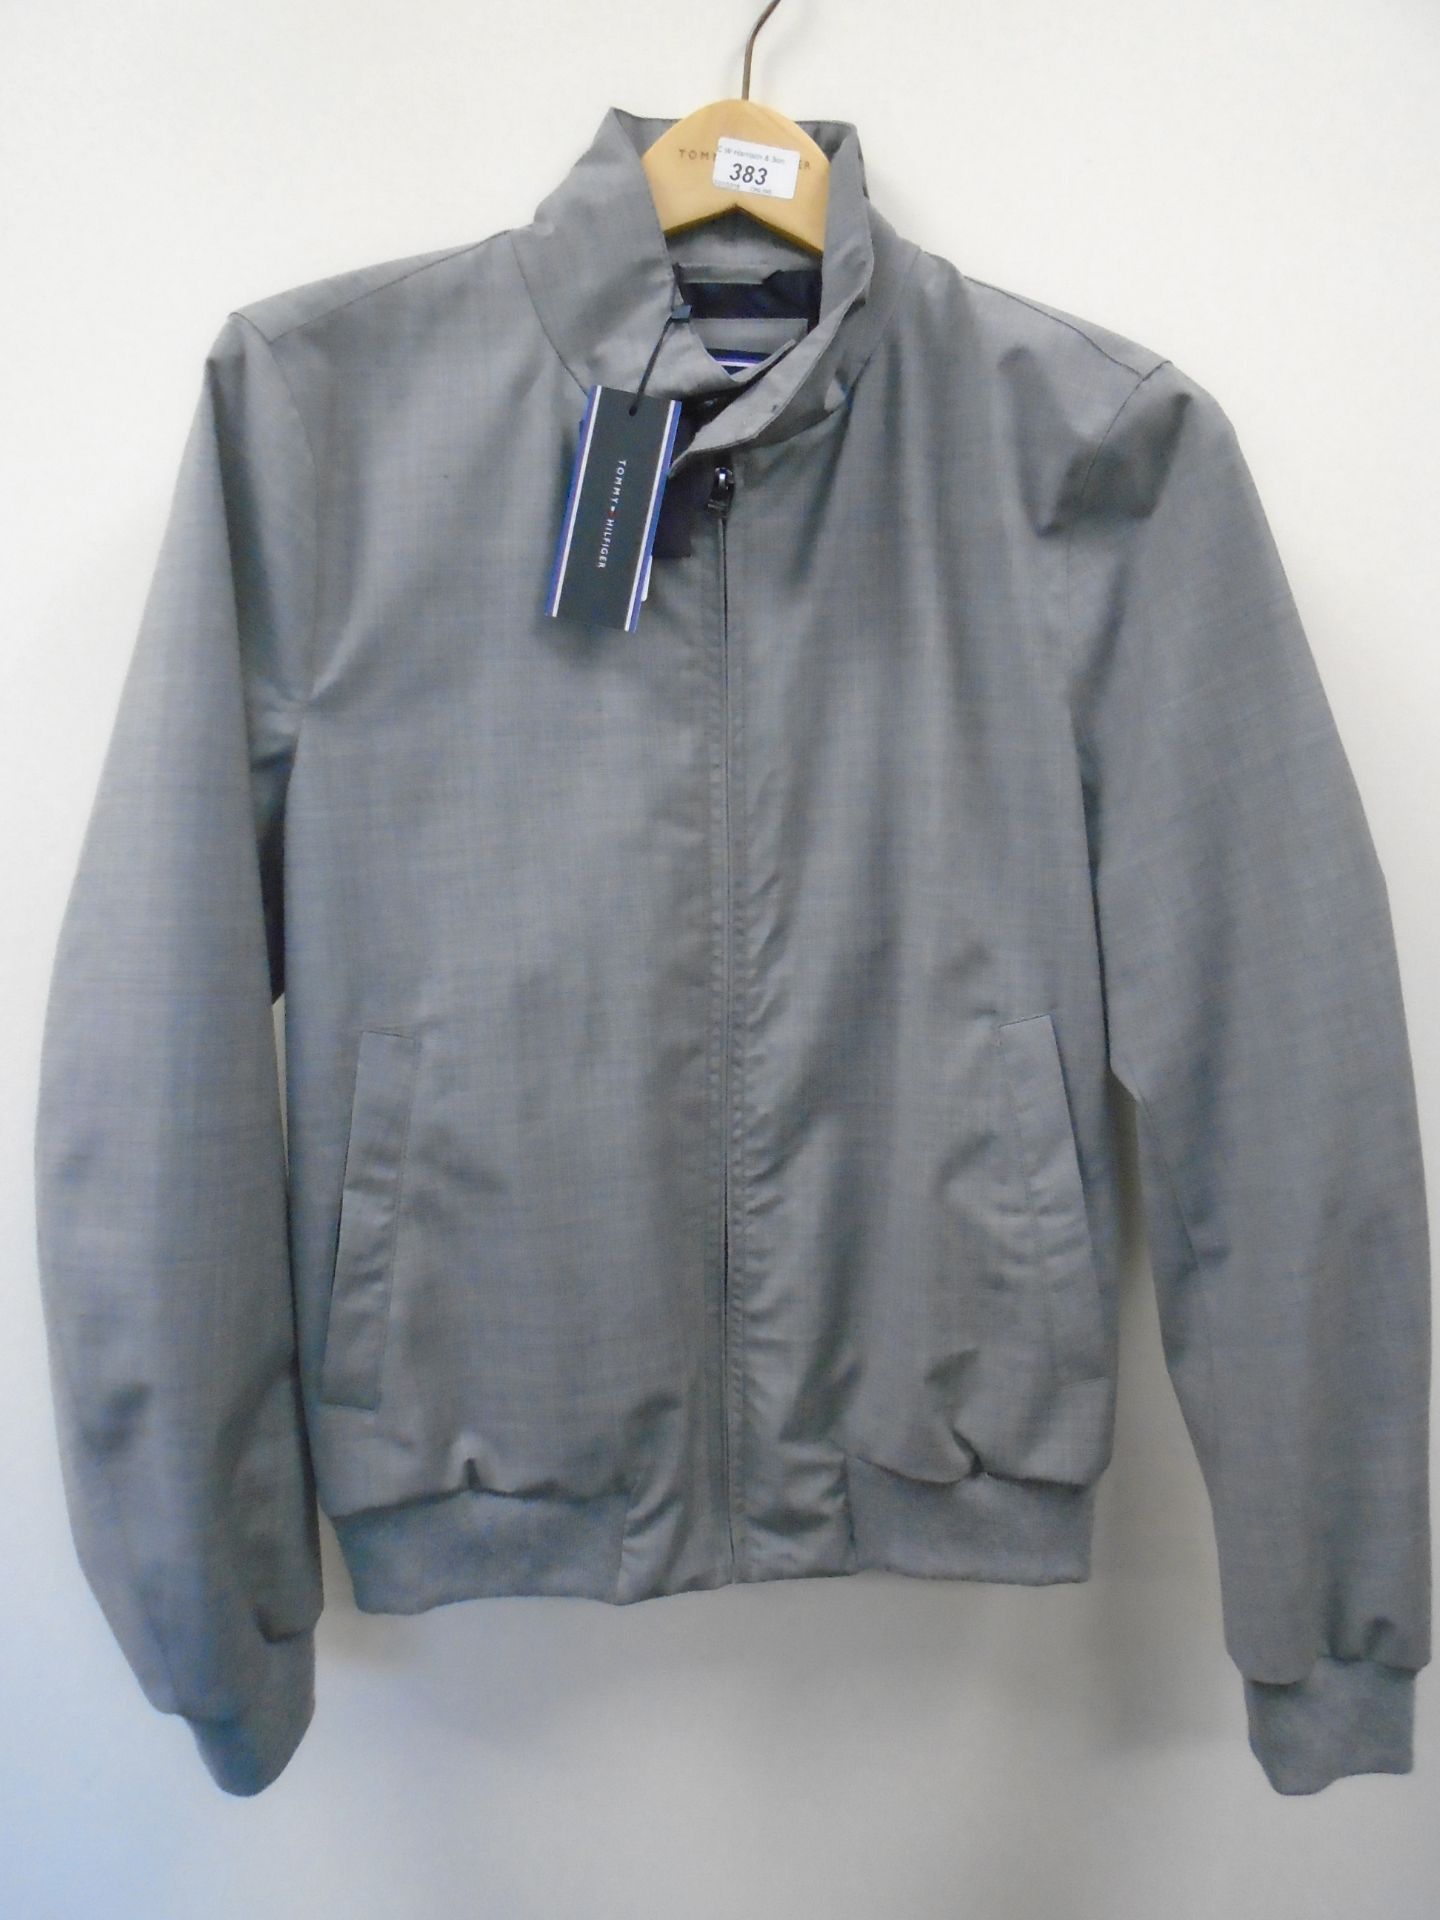 Tommy Hilfiger Heather bomber jacket - small - XL RRP £270